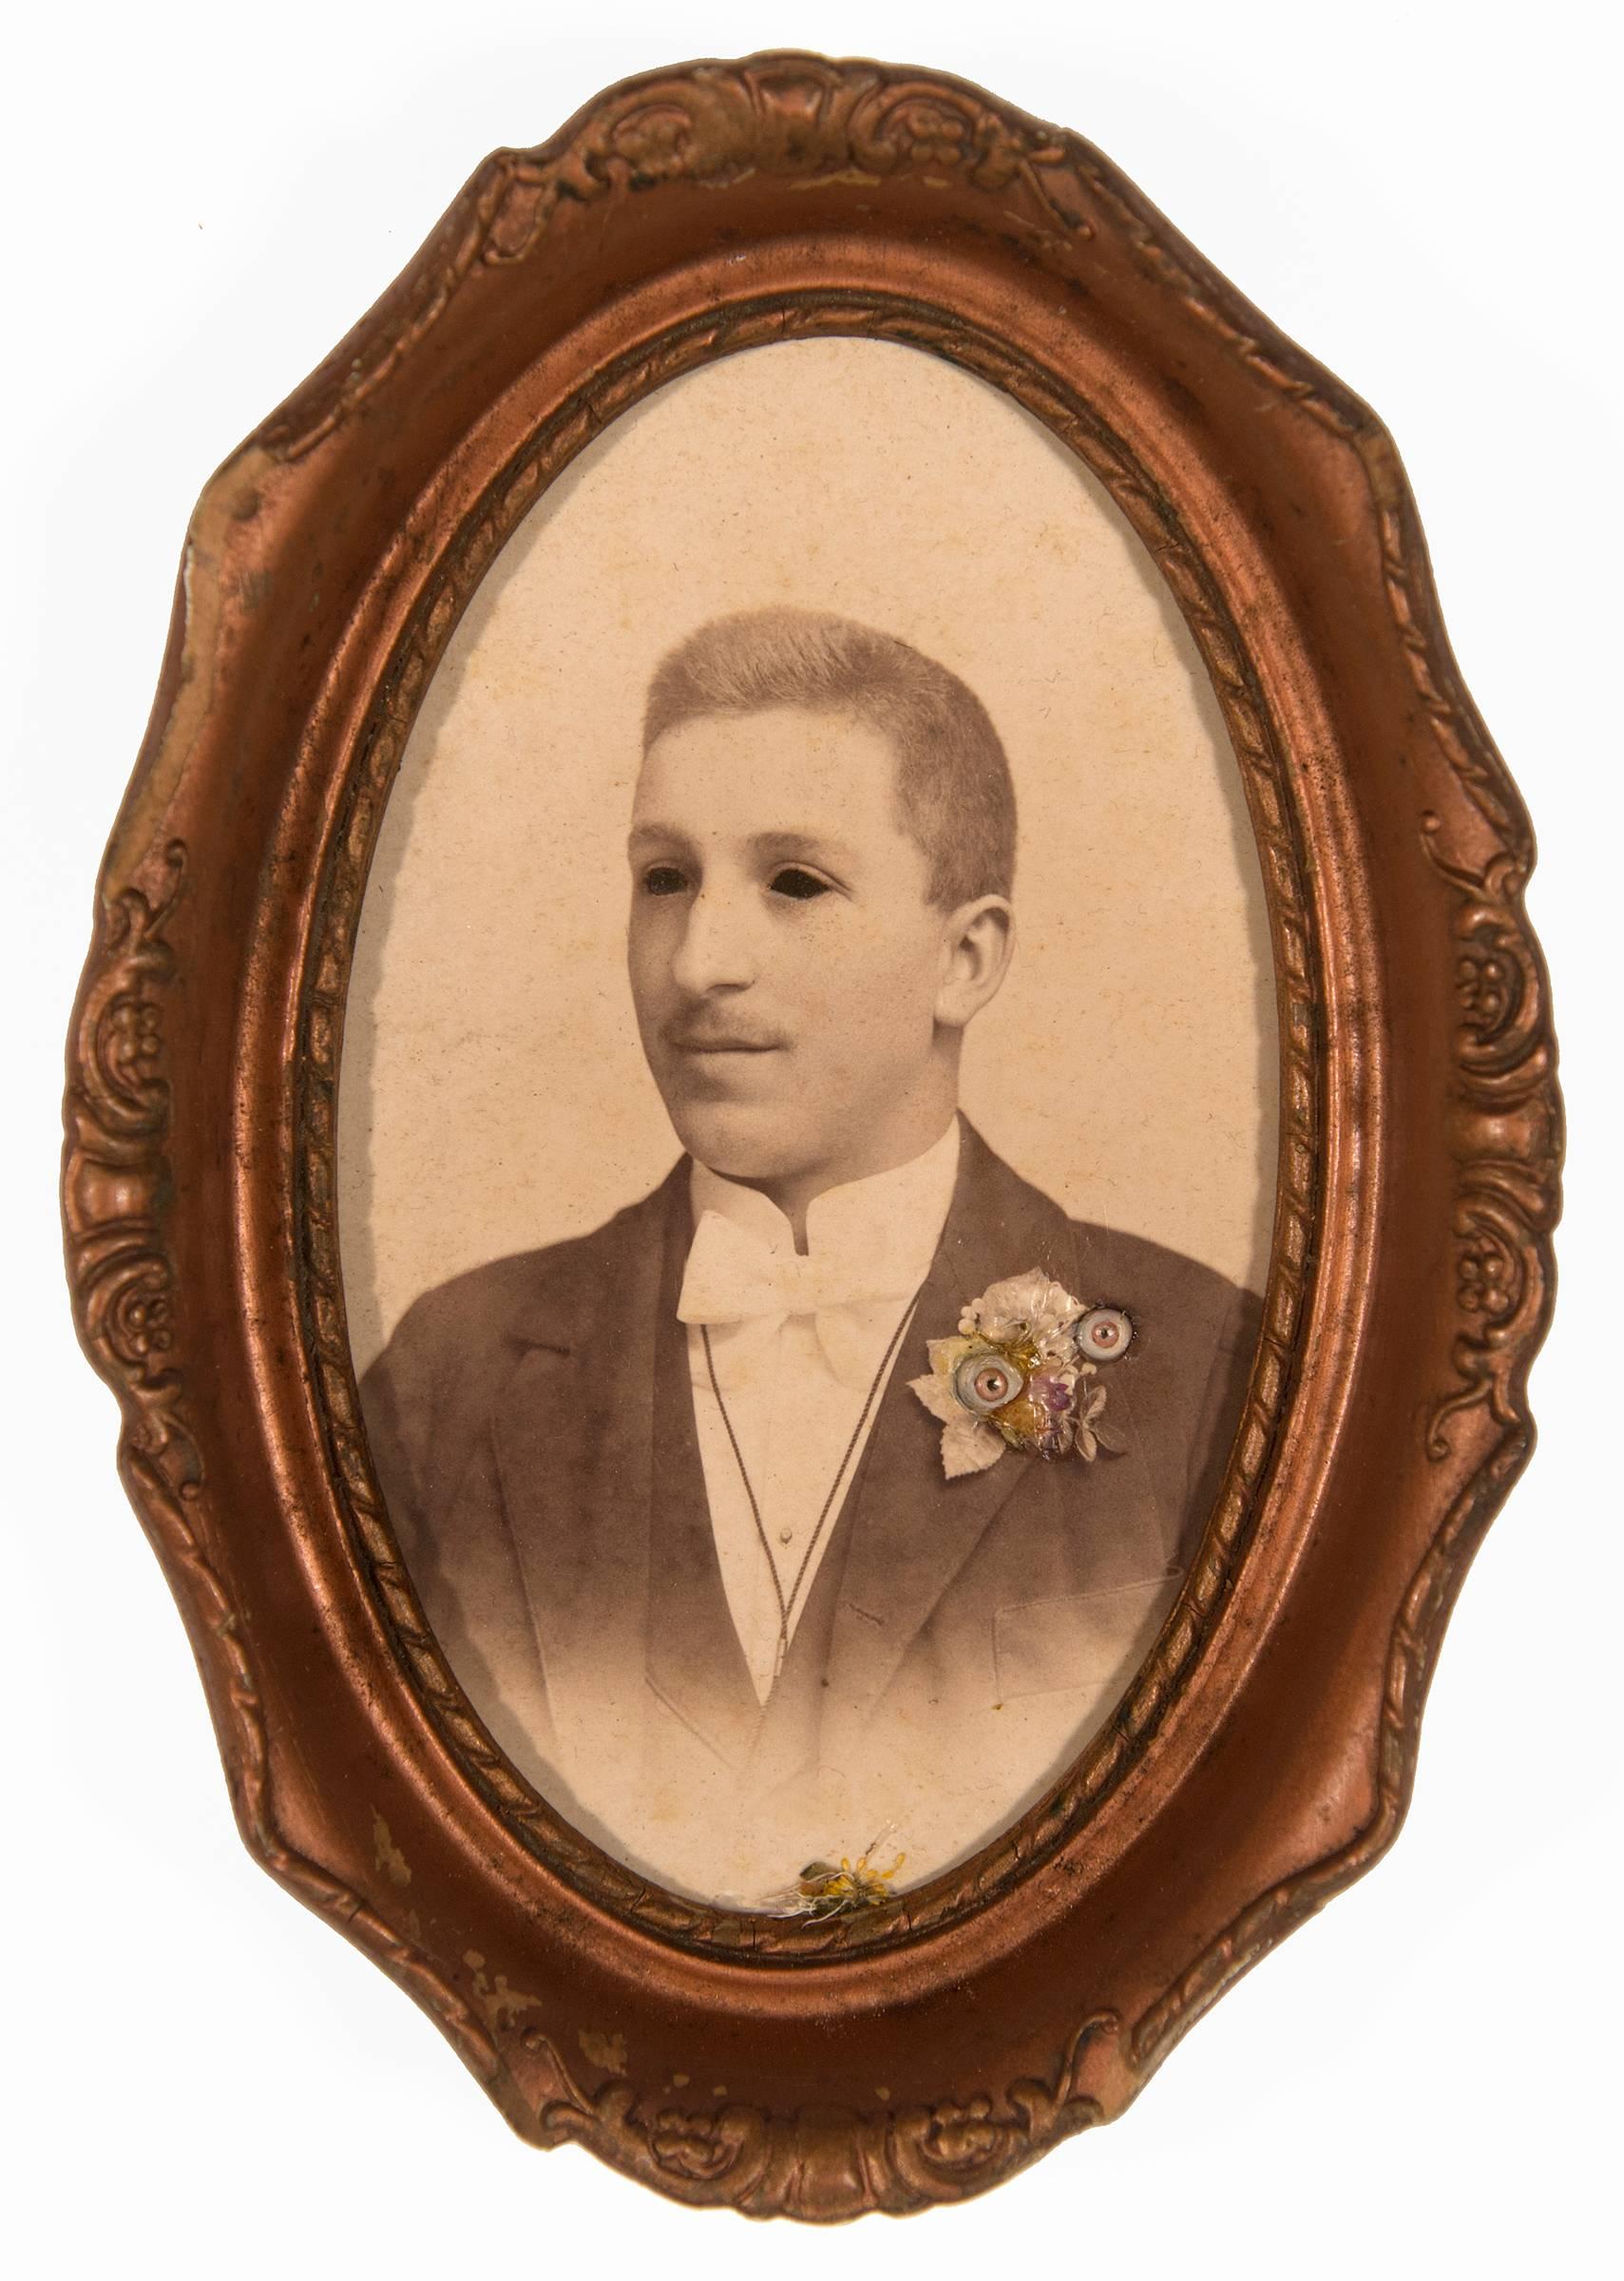 Jana Paleckova Portrait Photograph - Untitled (Man with eyes on his lapel)